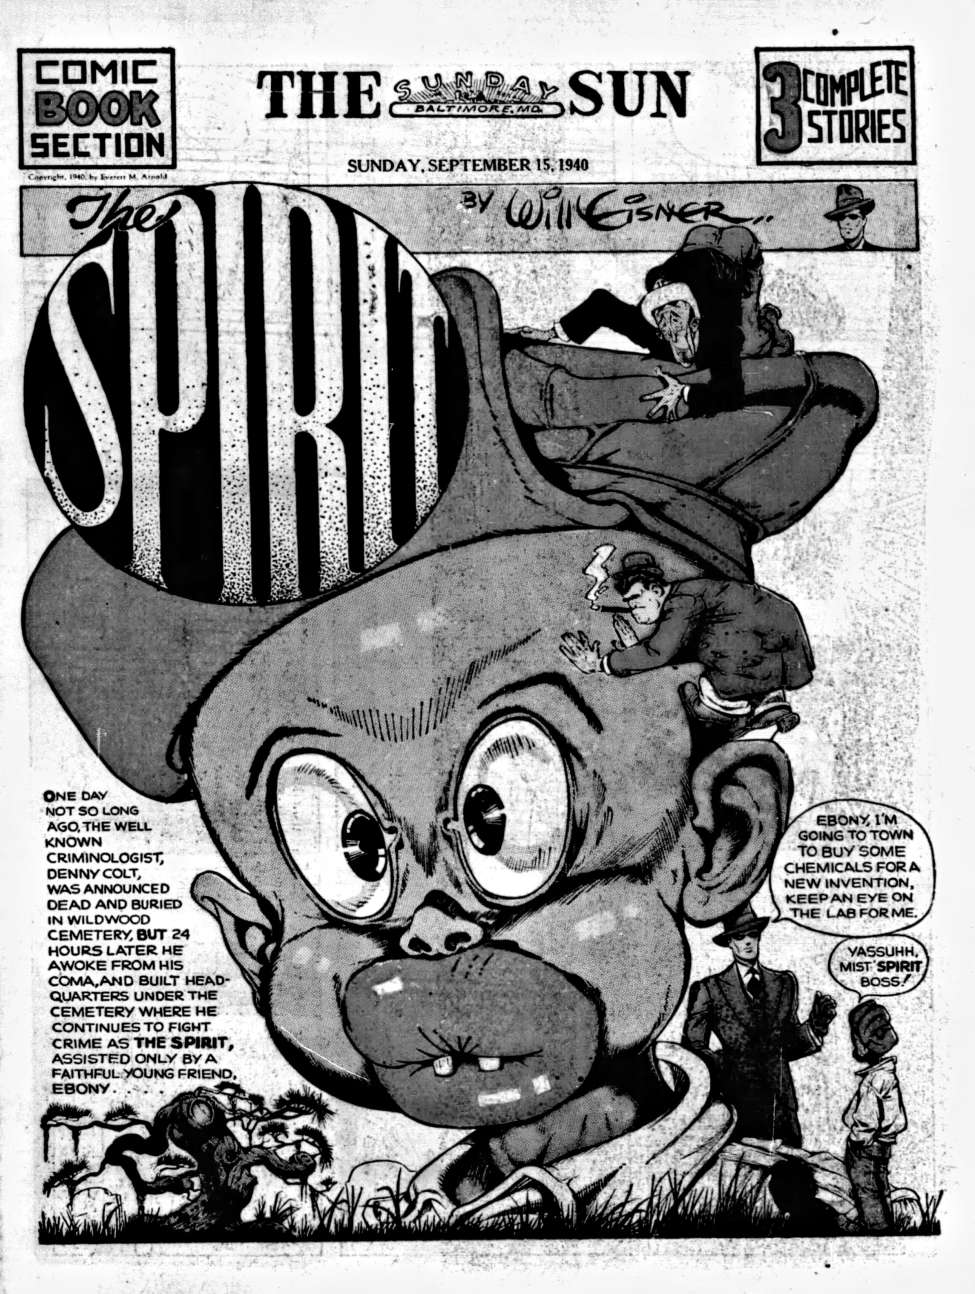 Comic Book Cover For The Spirit (1940-09-15) - Baltimore Sun (b/w)